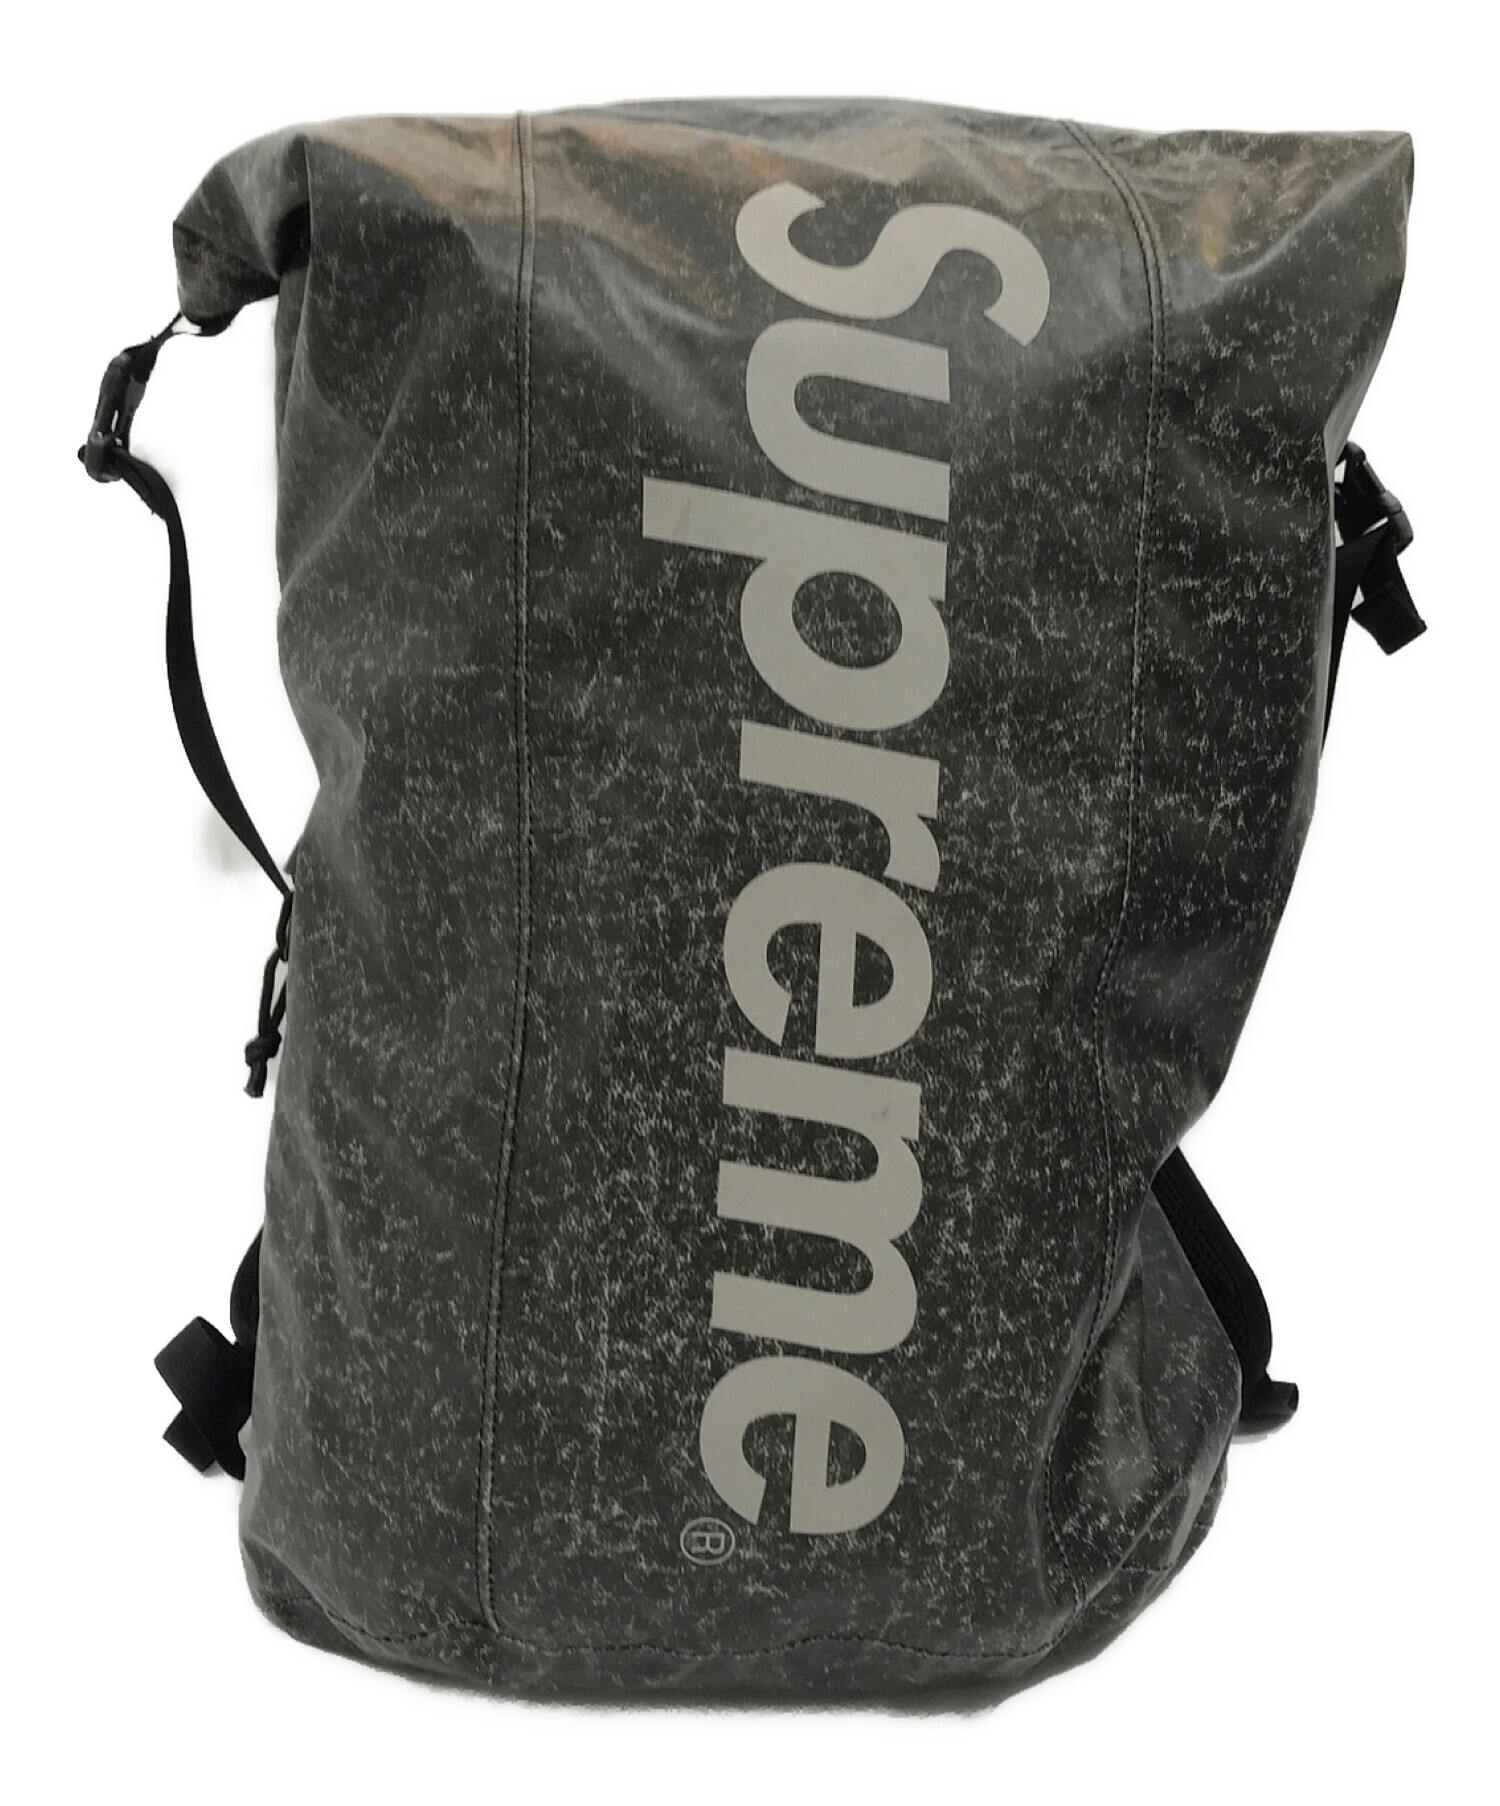 SUPREME (シュプリーム) waterproof reflective speckled backpack